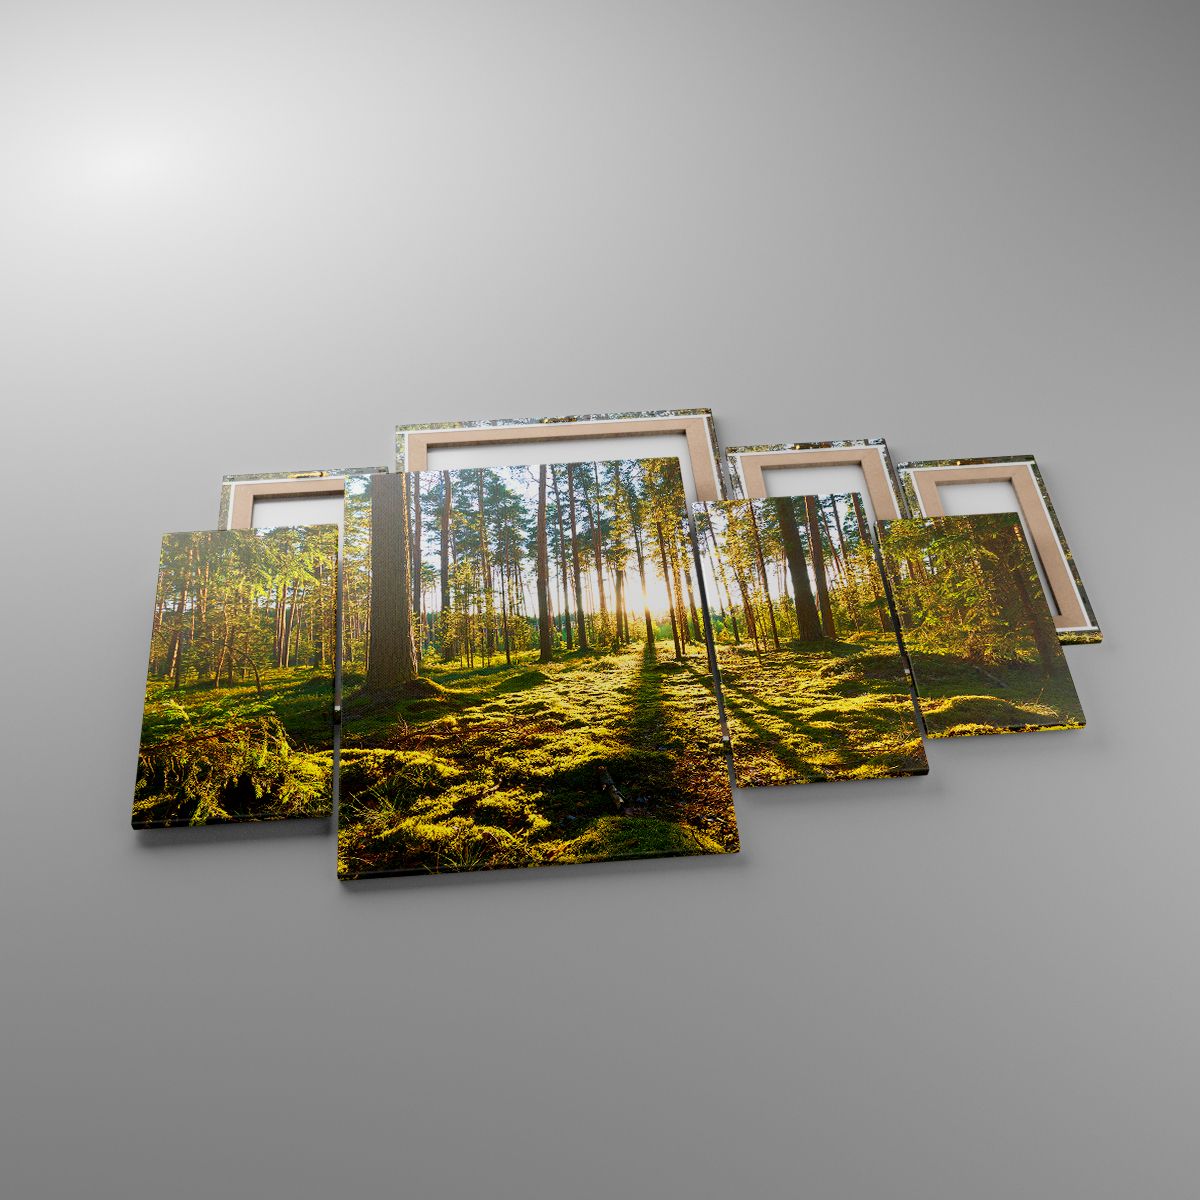 Obrazy Krajobraz, Obrazy Las, Obrazy Natura, Obrazy Promienie Słońca, Obrazy Drzewa